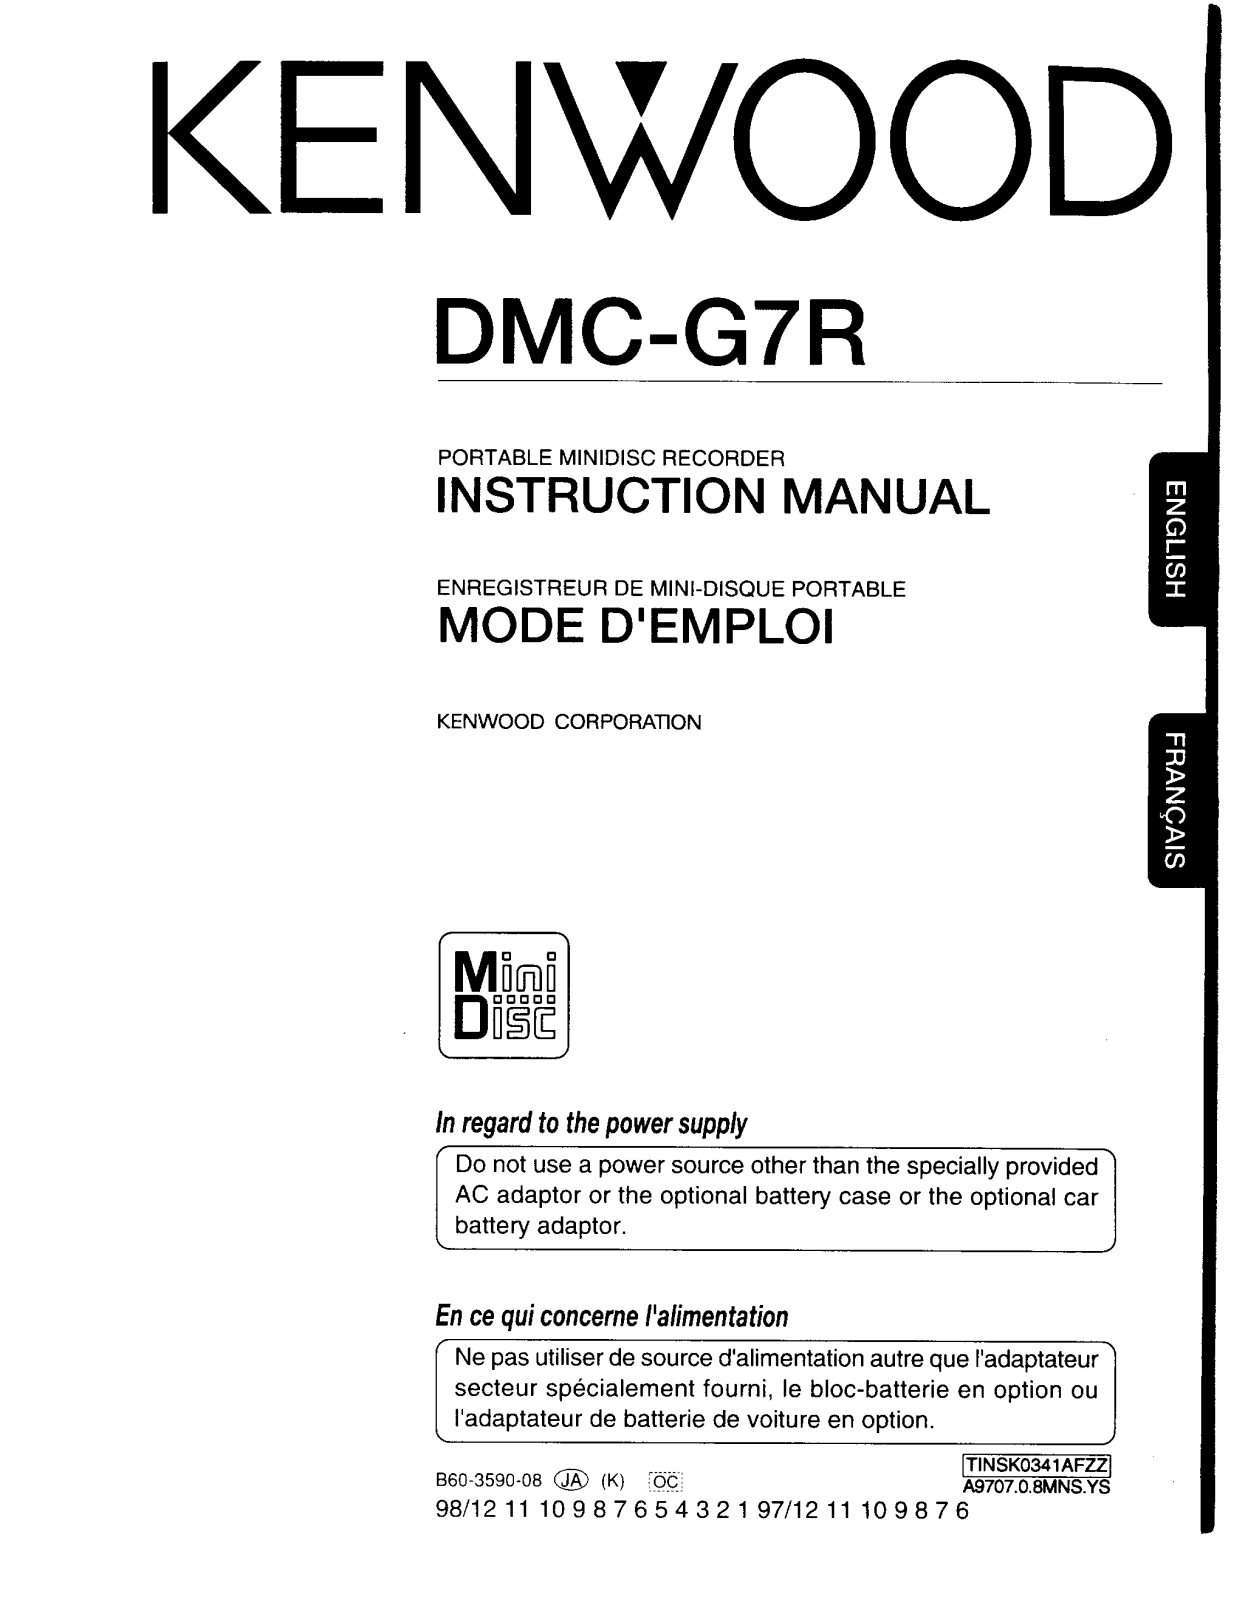 Kenwood DMC-G7R Owner's Manual